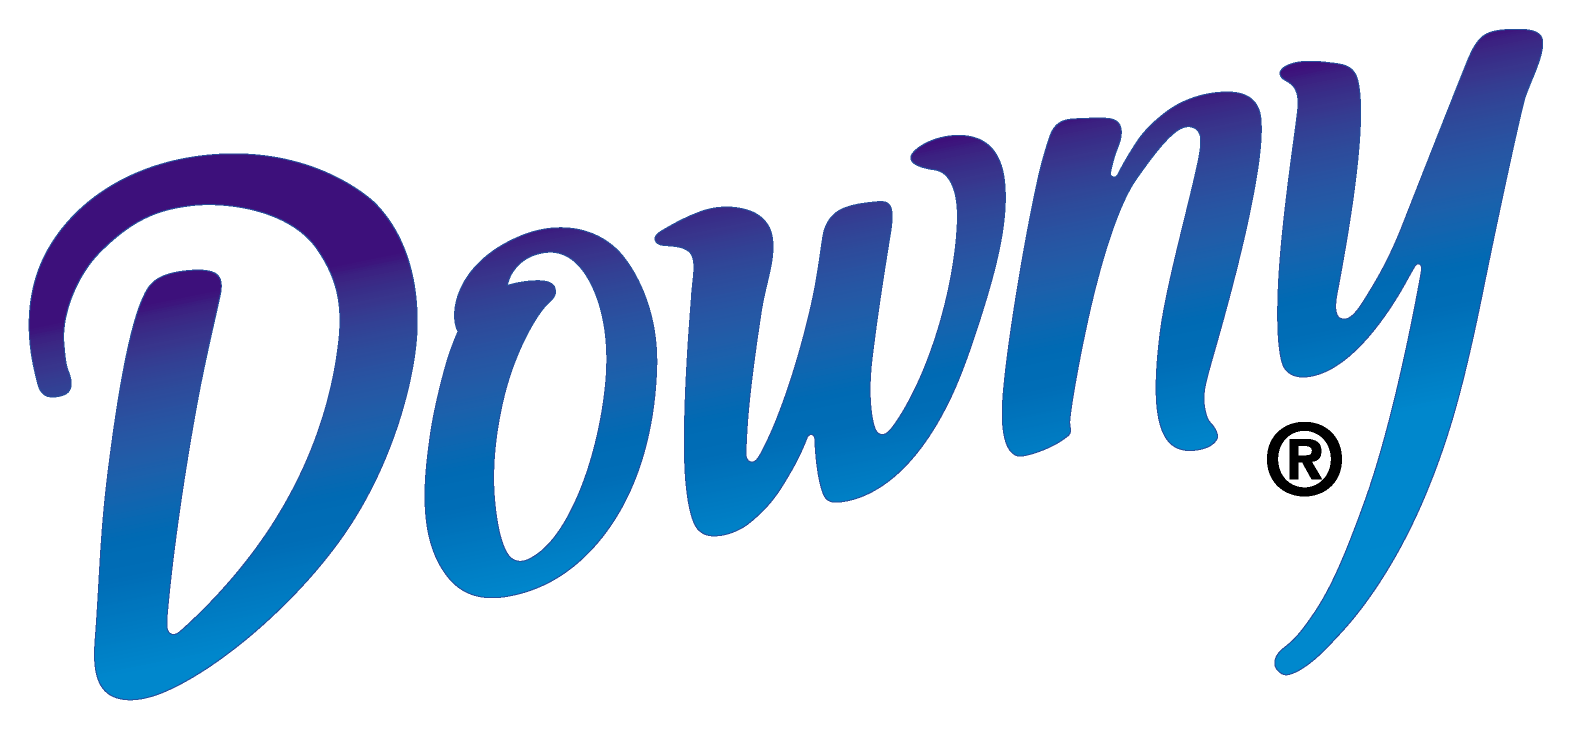 Downy Logo - Image - Downy logo 2002.png | Logopedia | FANDOM powered by Wikia